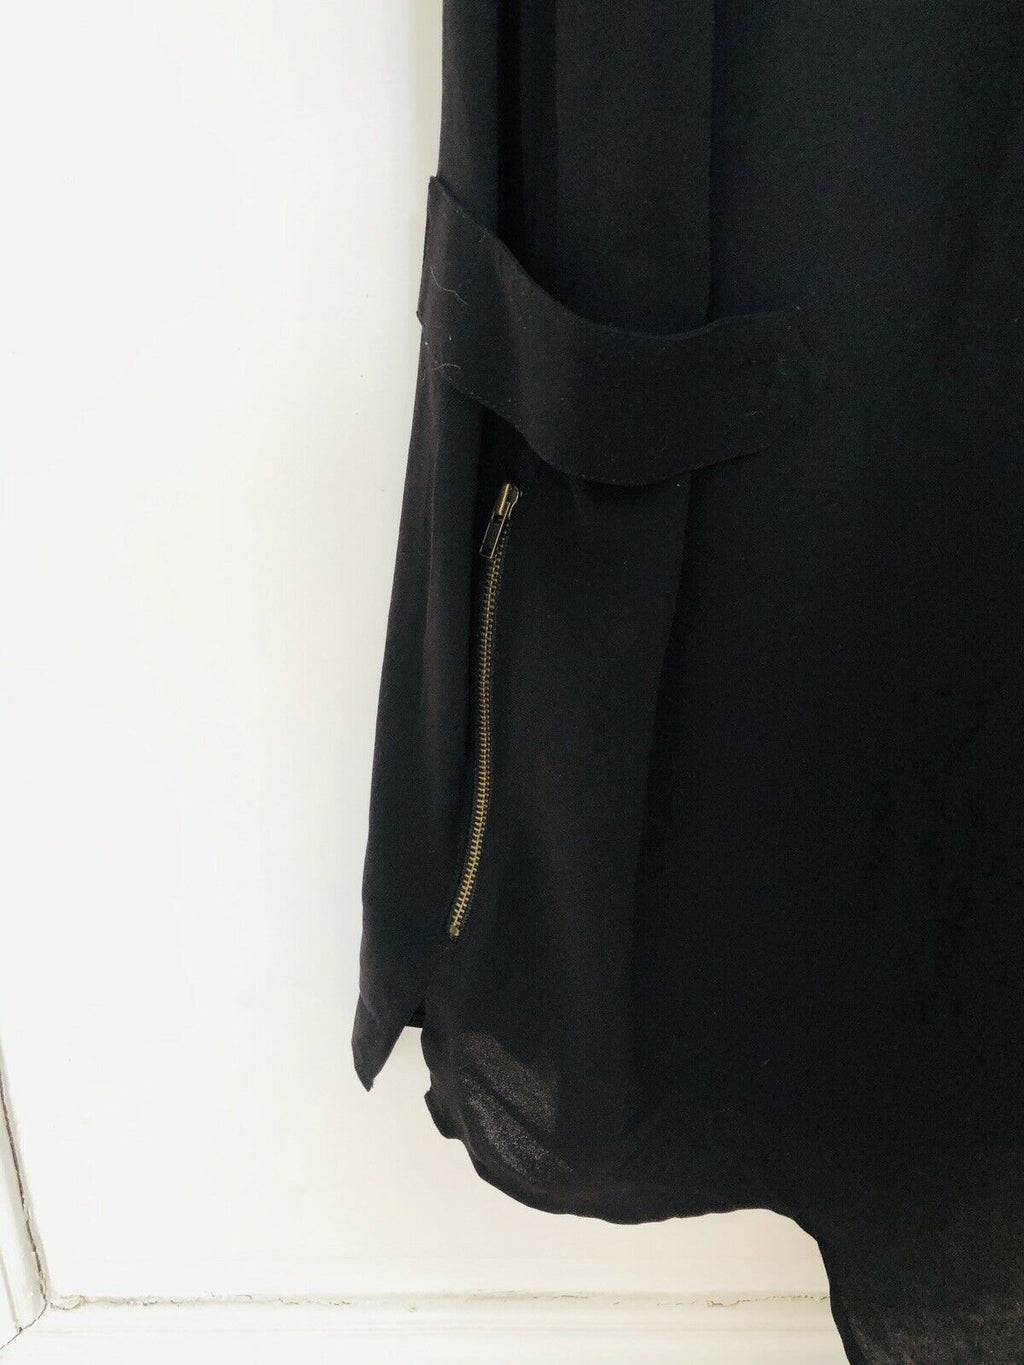 Acne Studios Black Dress Size M